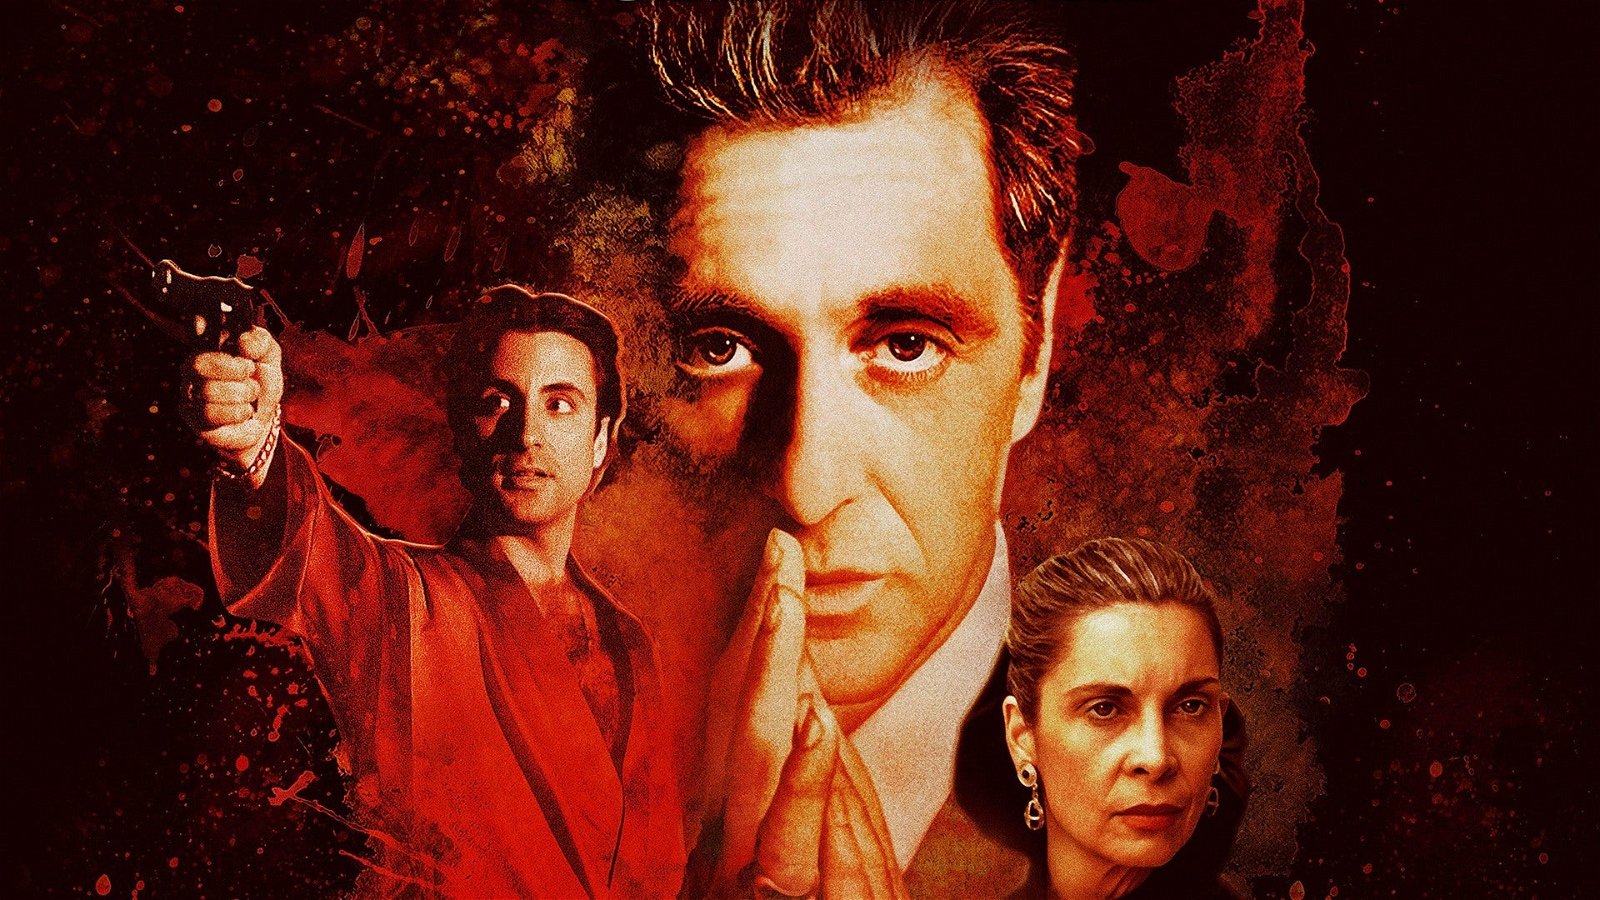 The Godfather Coda - The Death of Michael Corleone (2020)